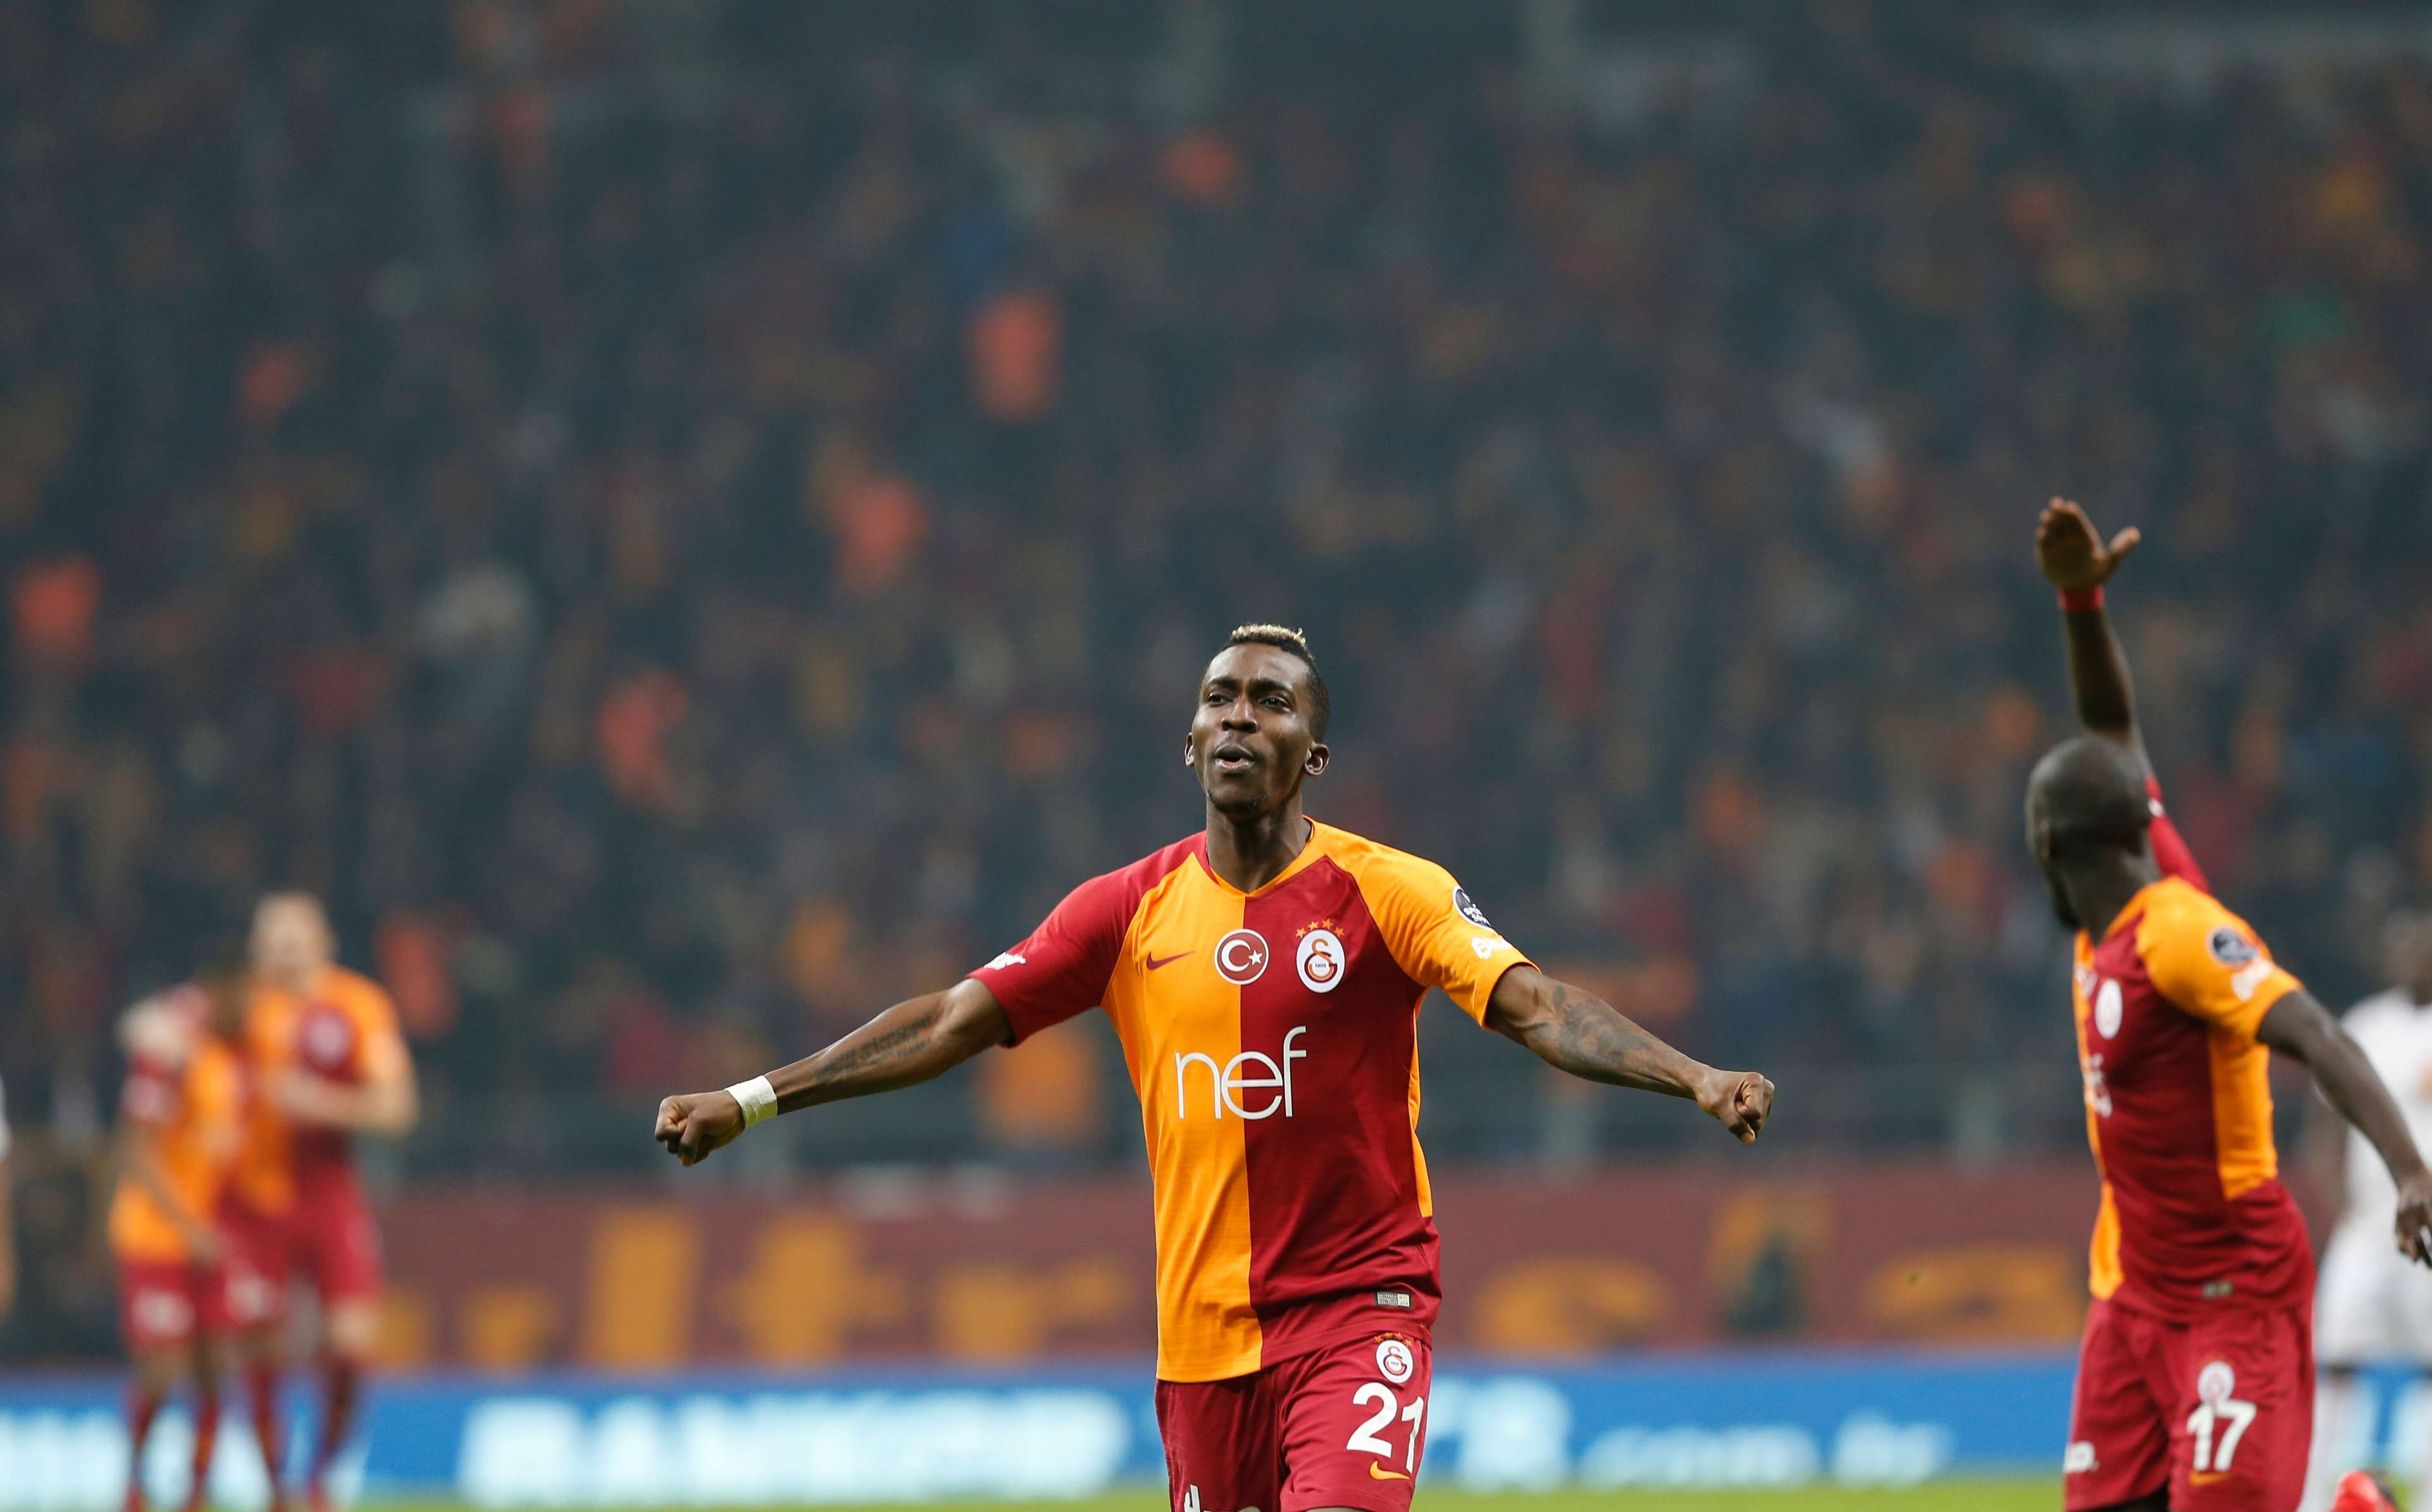 Henry Onyekuru Goal Celebration Galatasaray Sivasspor Turkish Super League 12/23/18